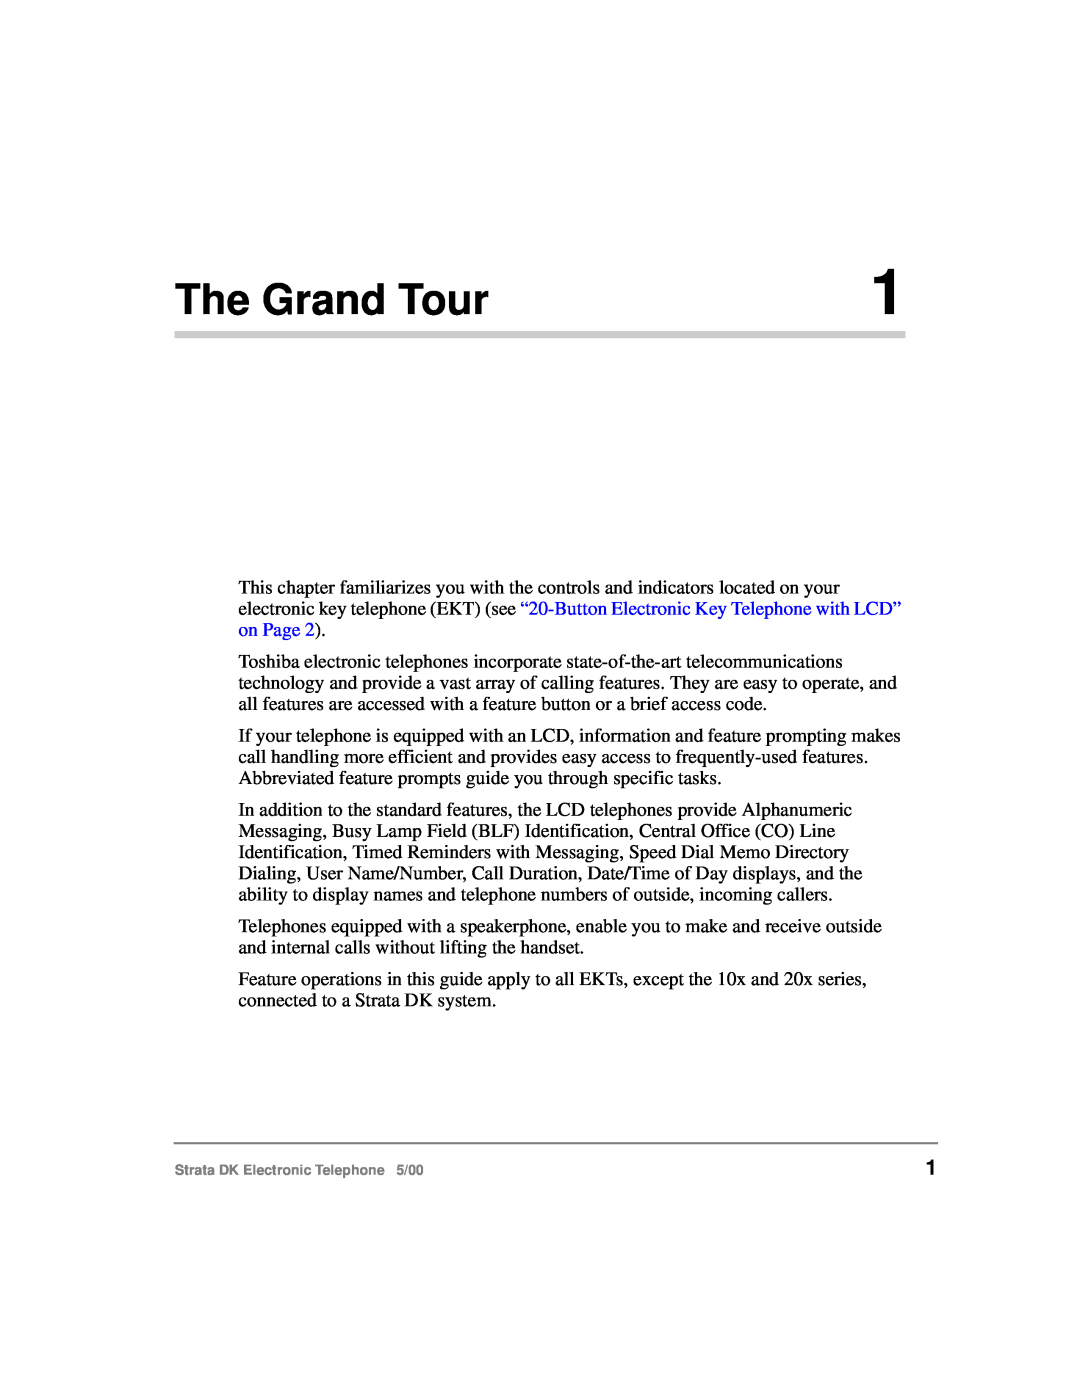 Toshiba Strata DK manual The Grand Tour 